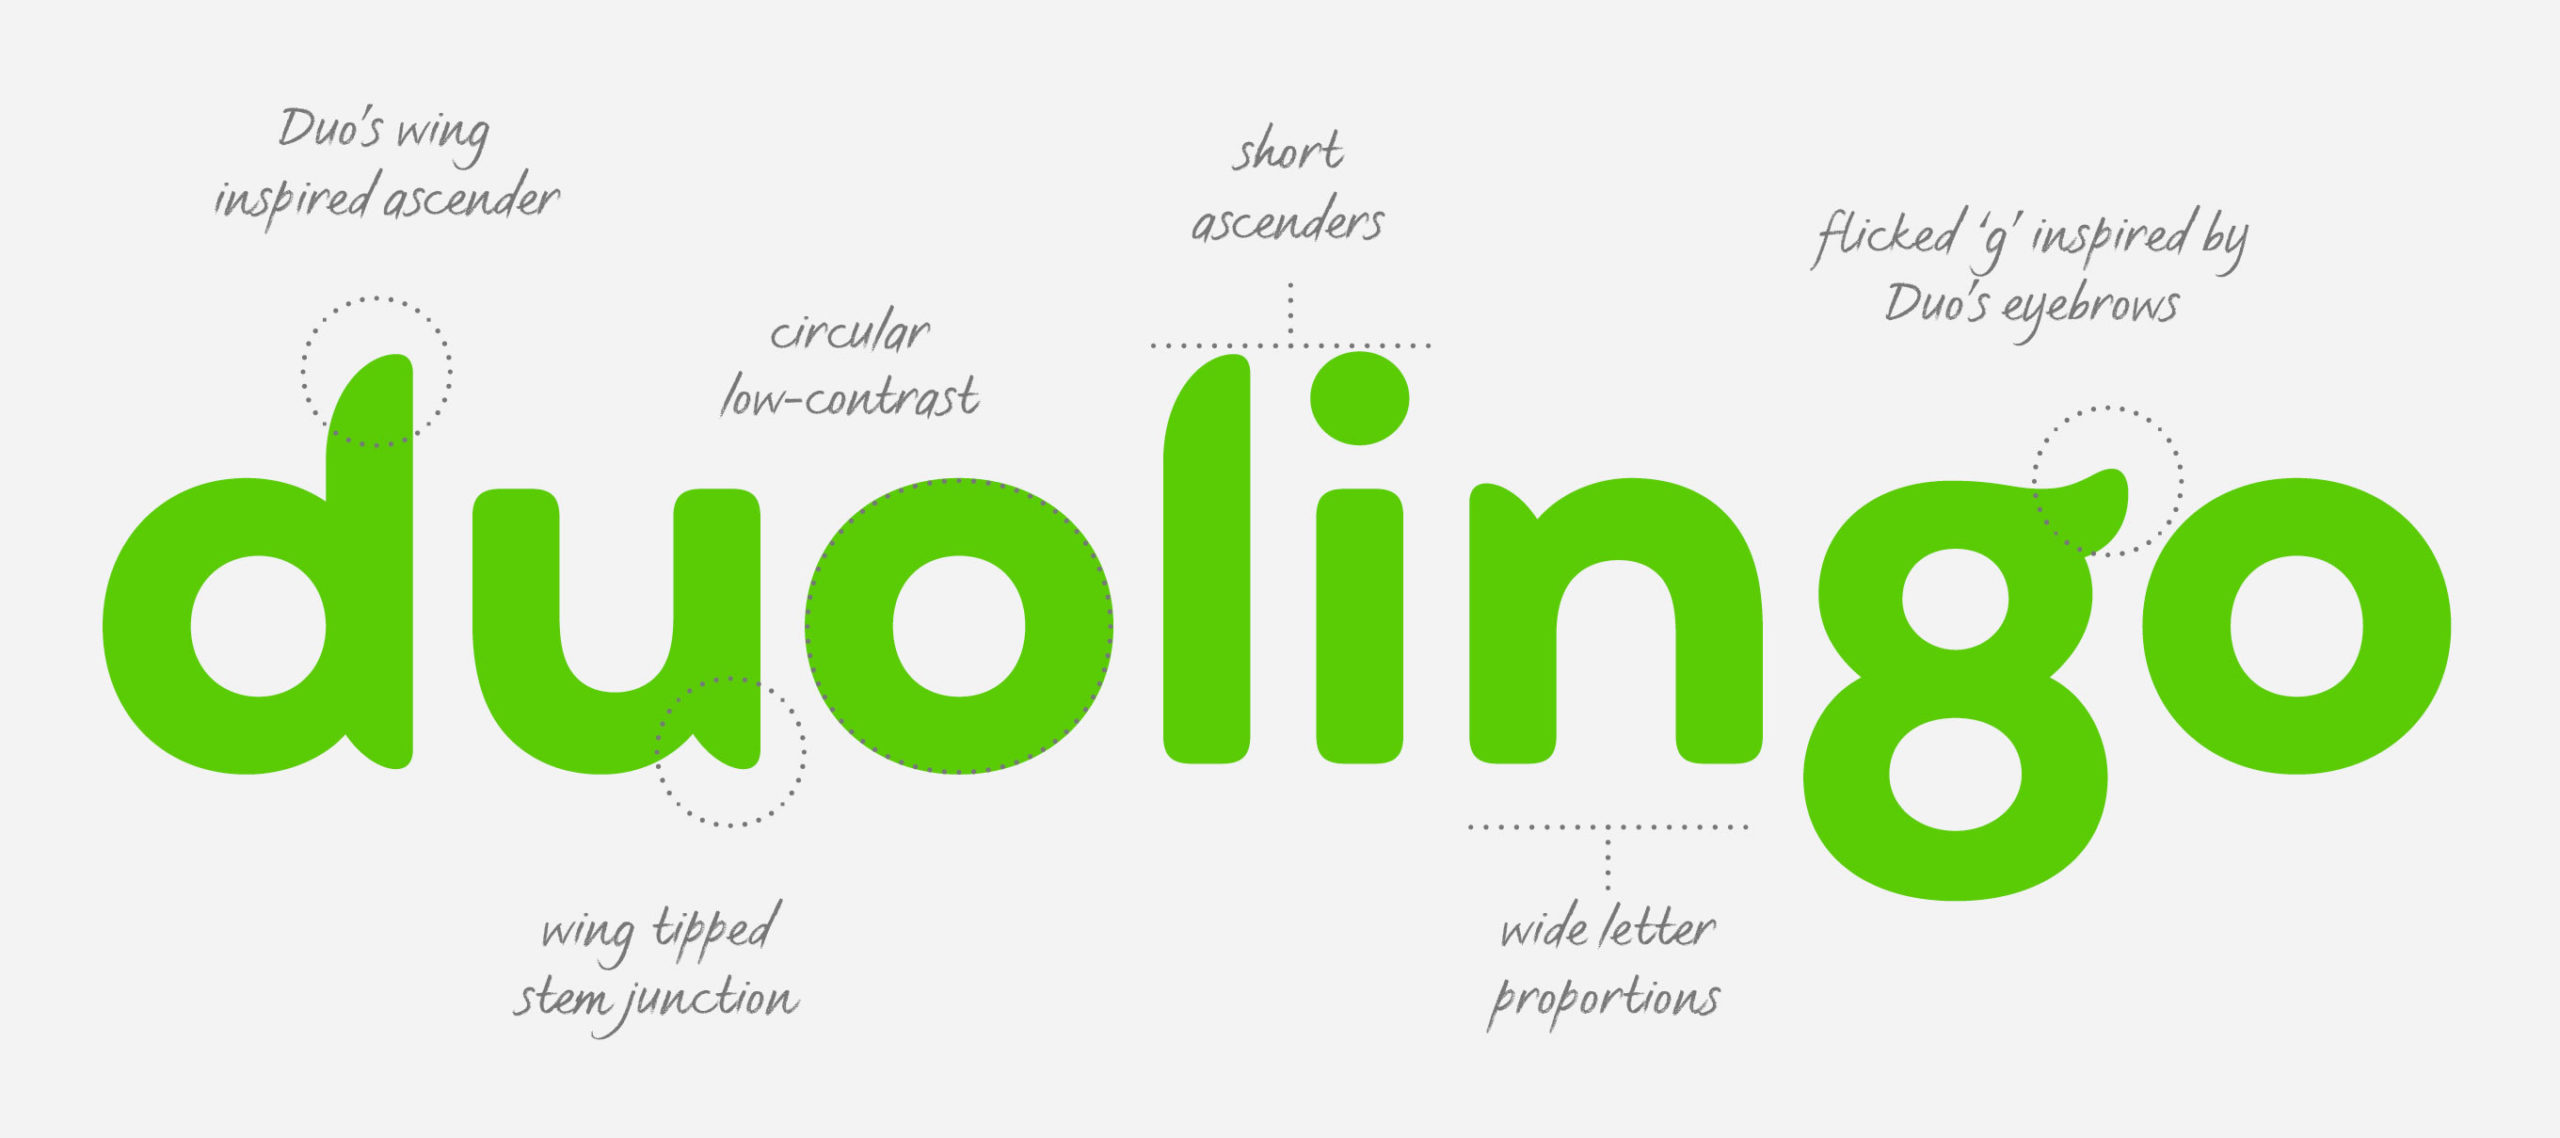 Duolingo_typography5-by-Johnson-Banks